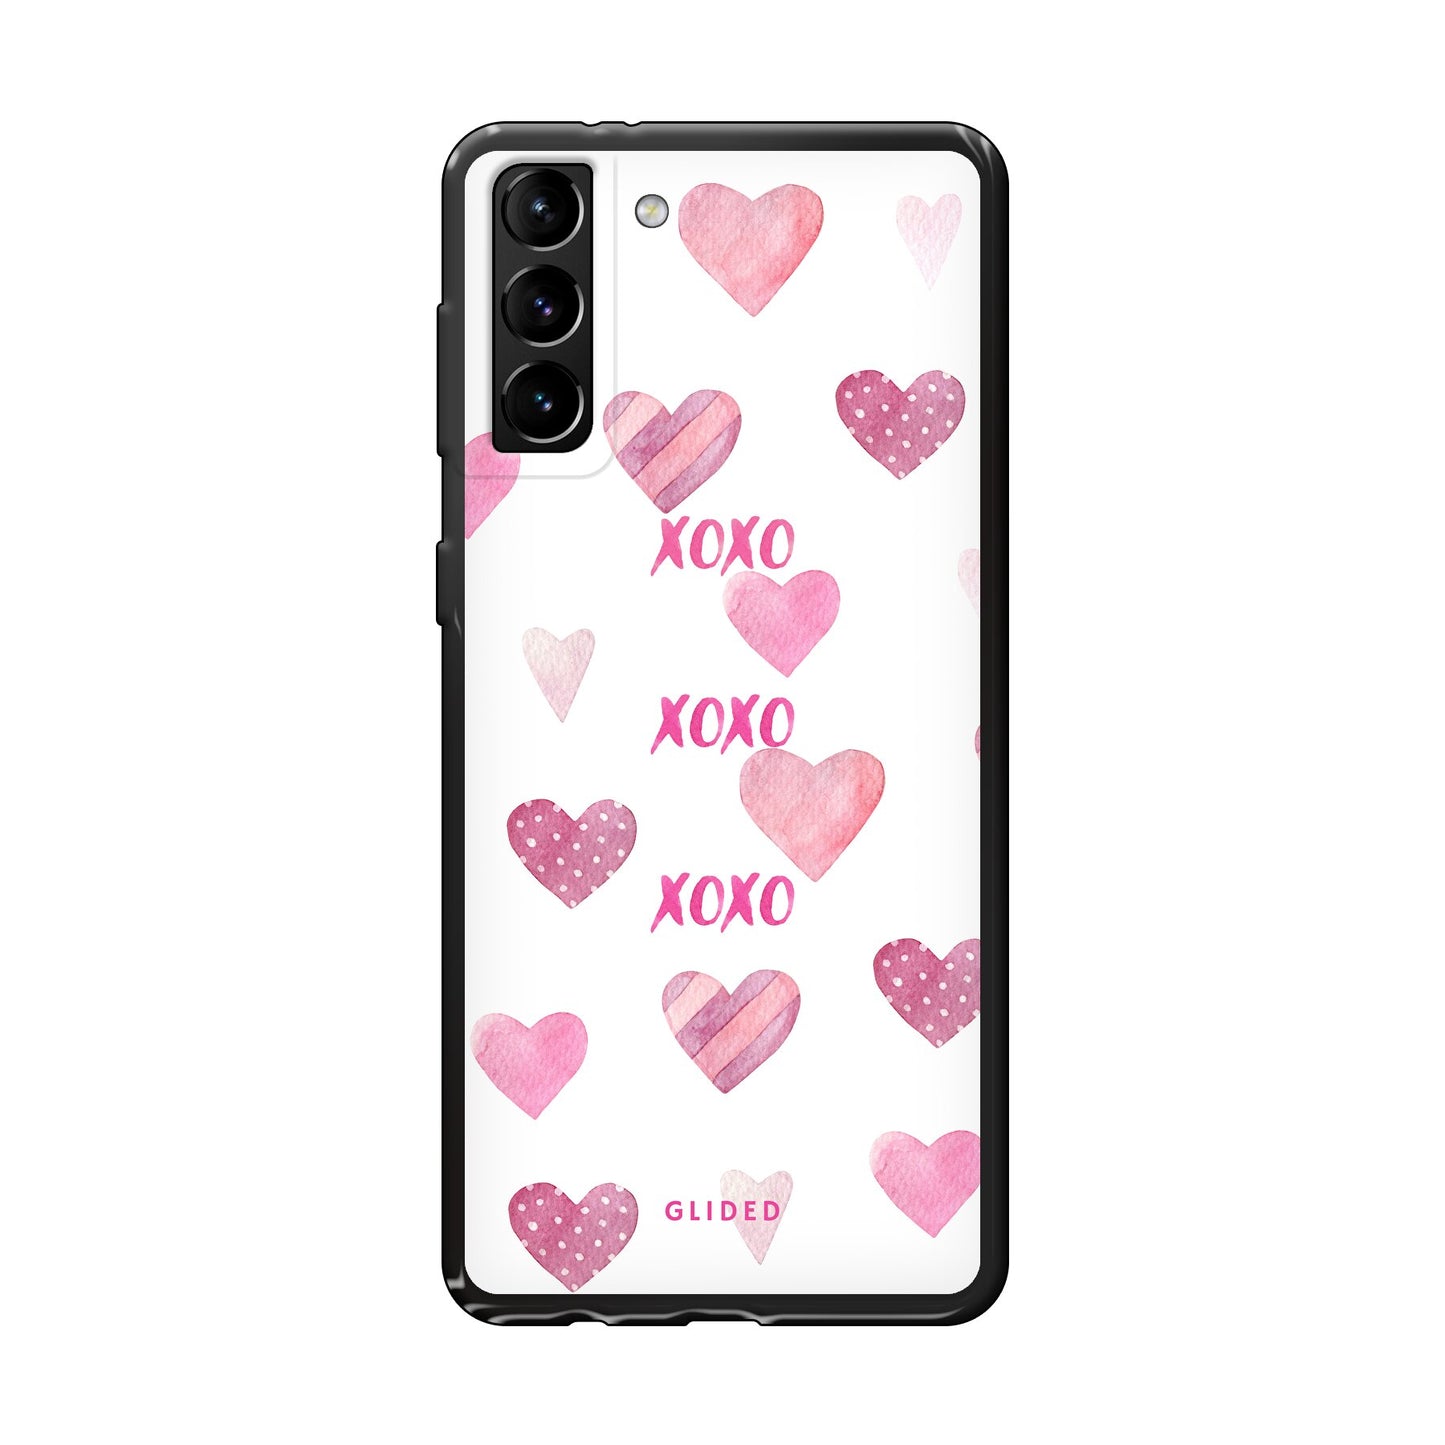 Xoxo - Samsung Galaxy S21 Plus 5G - Soft case